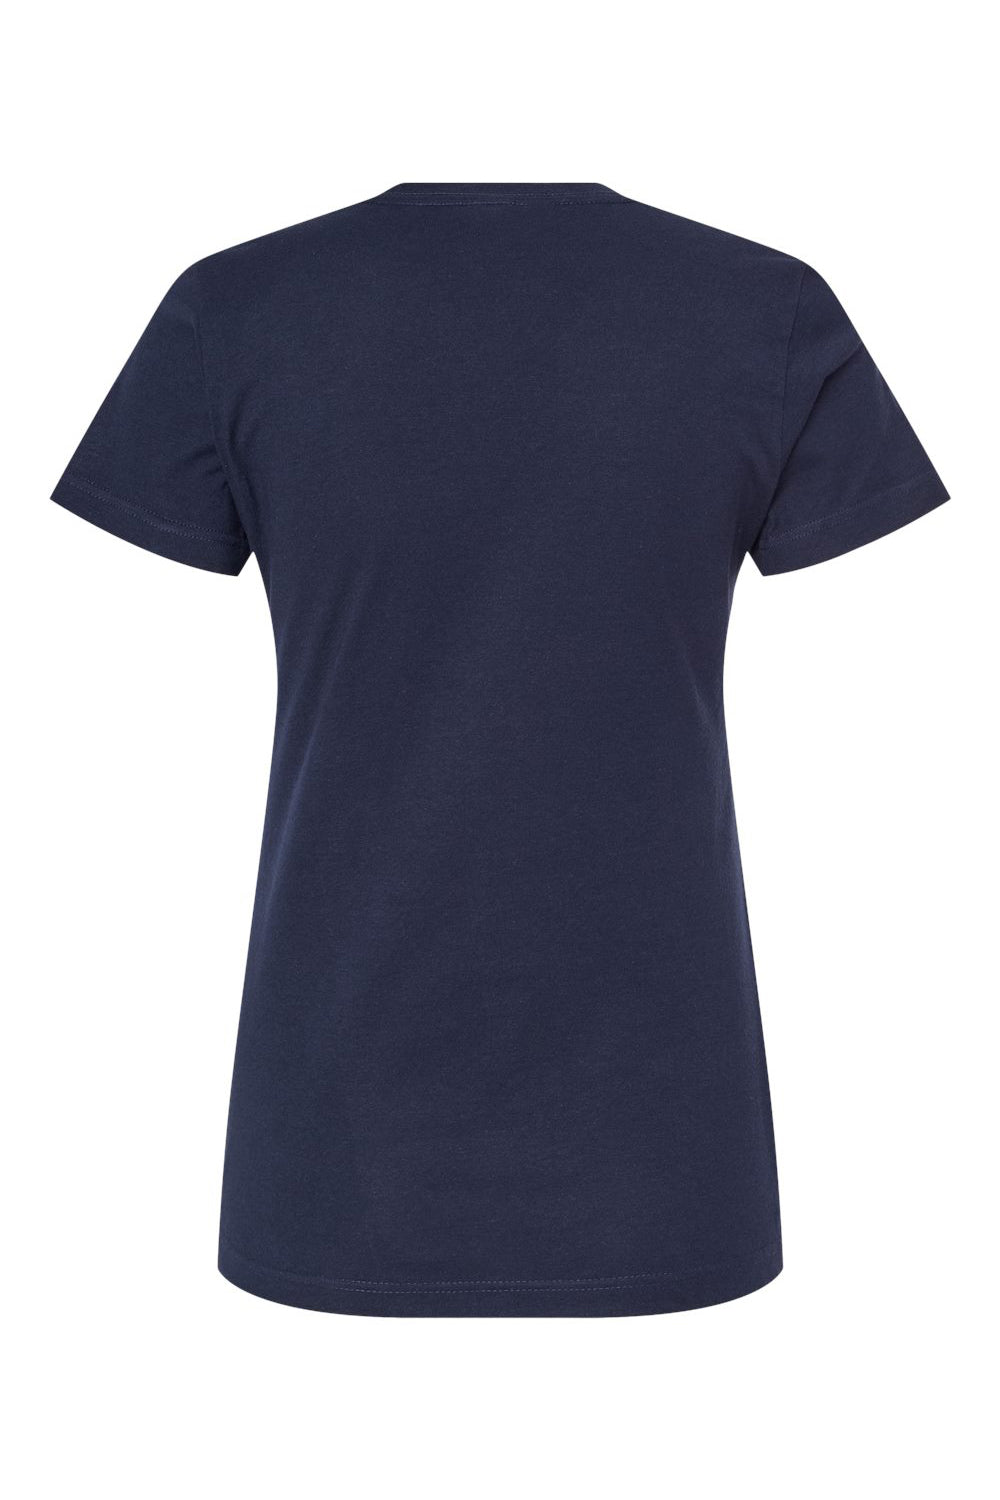 Tultex 216 Womens Fine Jersey Classic Fit Short Sleeve Crewneck T-Shirt Navy Blue Flat Back